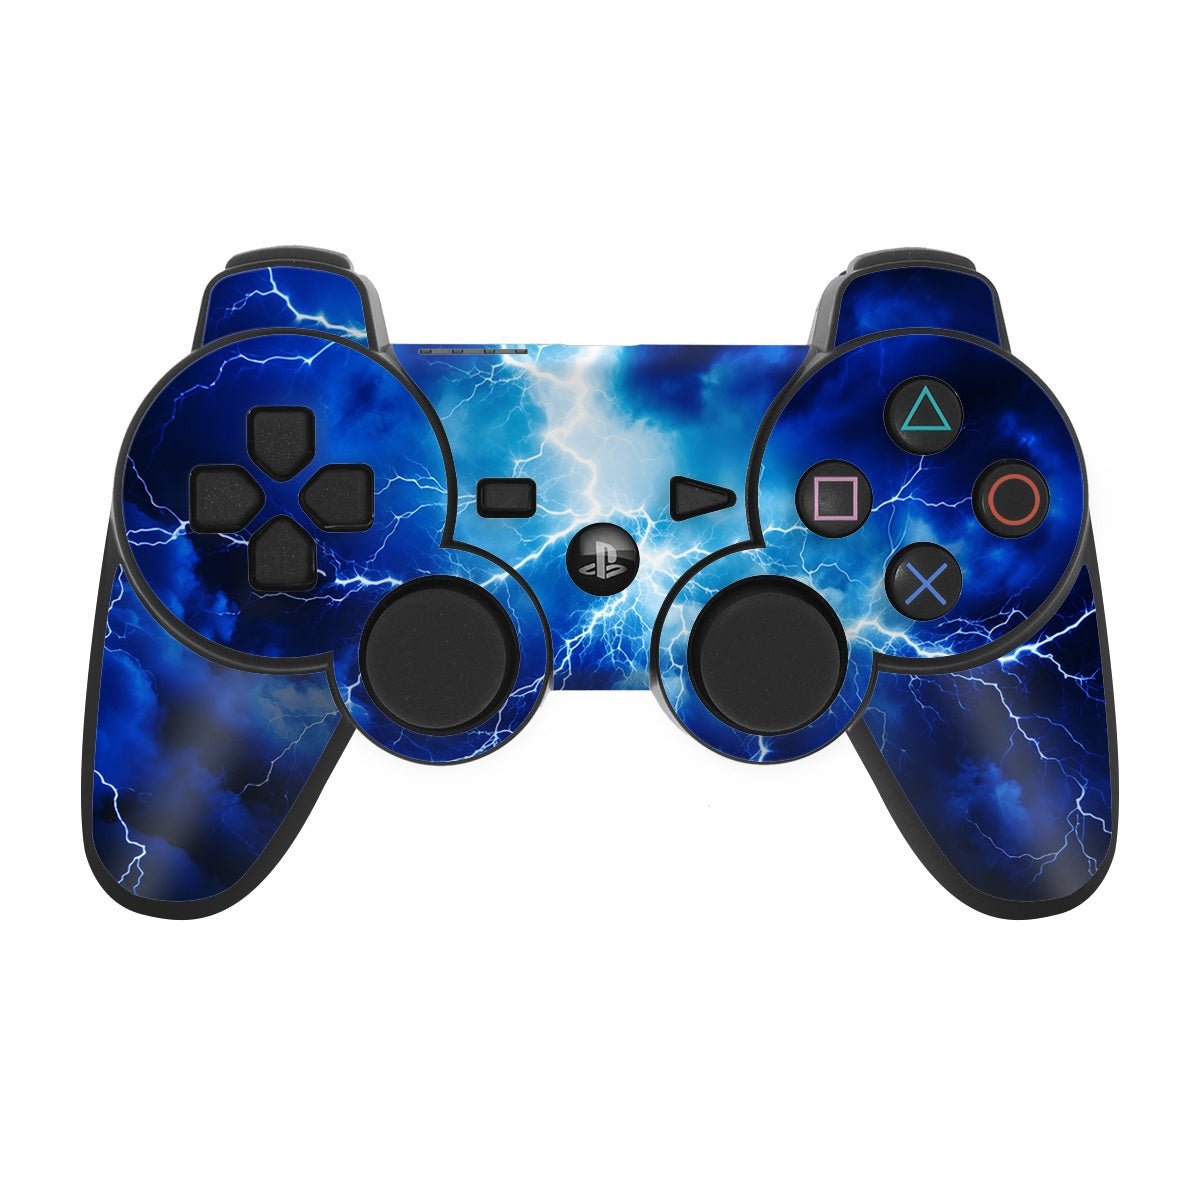 Apocalypse Blue - Sony PS3 Controller Skin - Gaming - DecalGirl